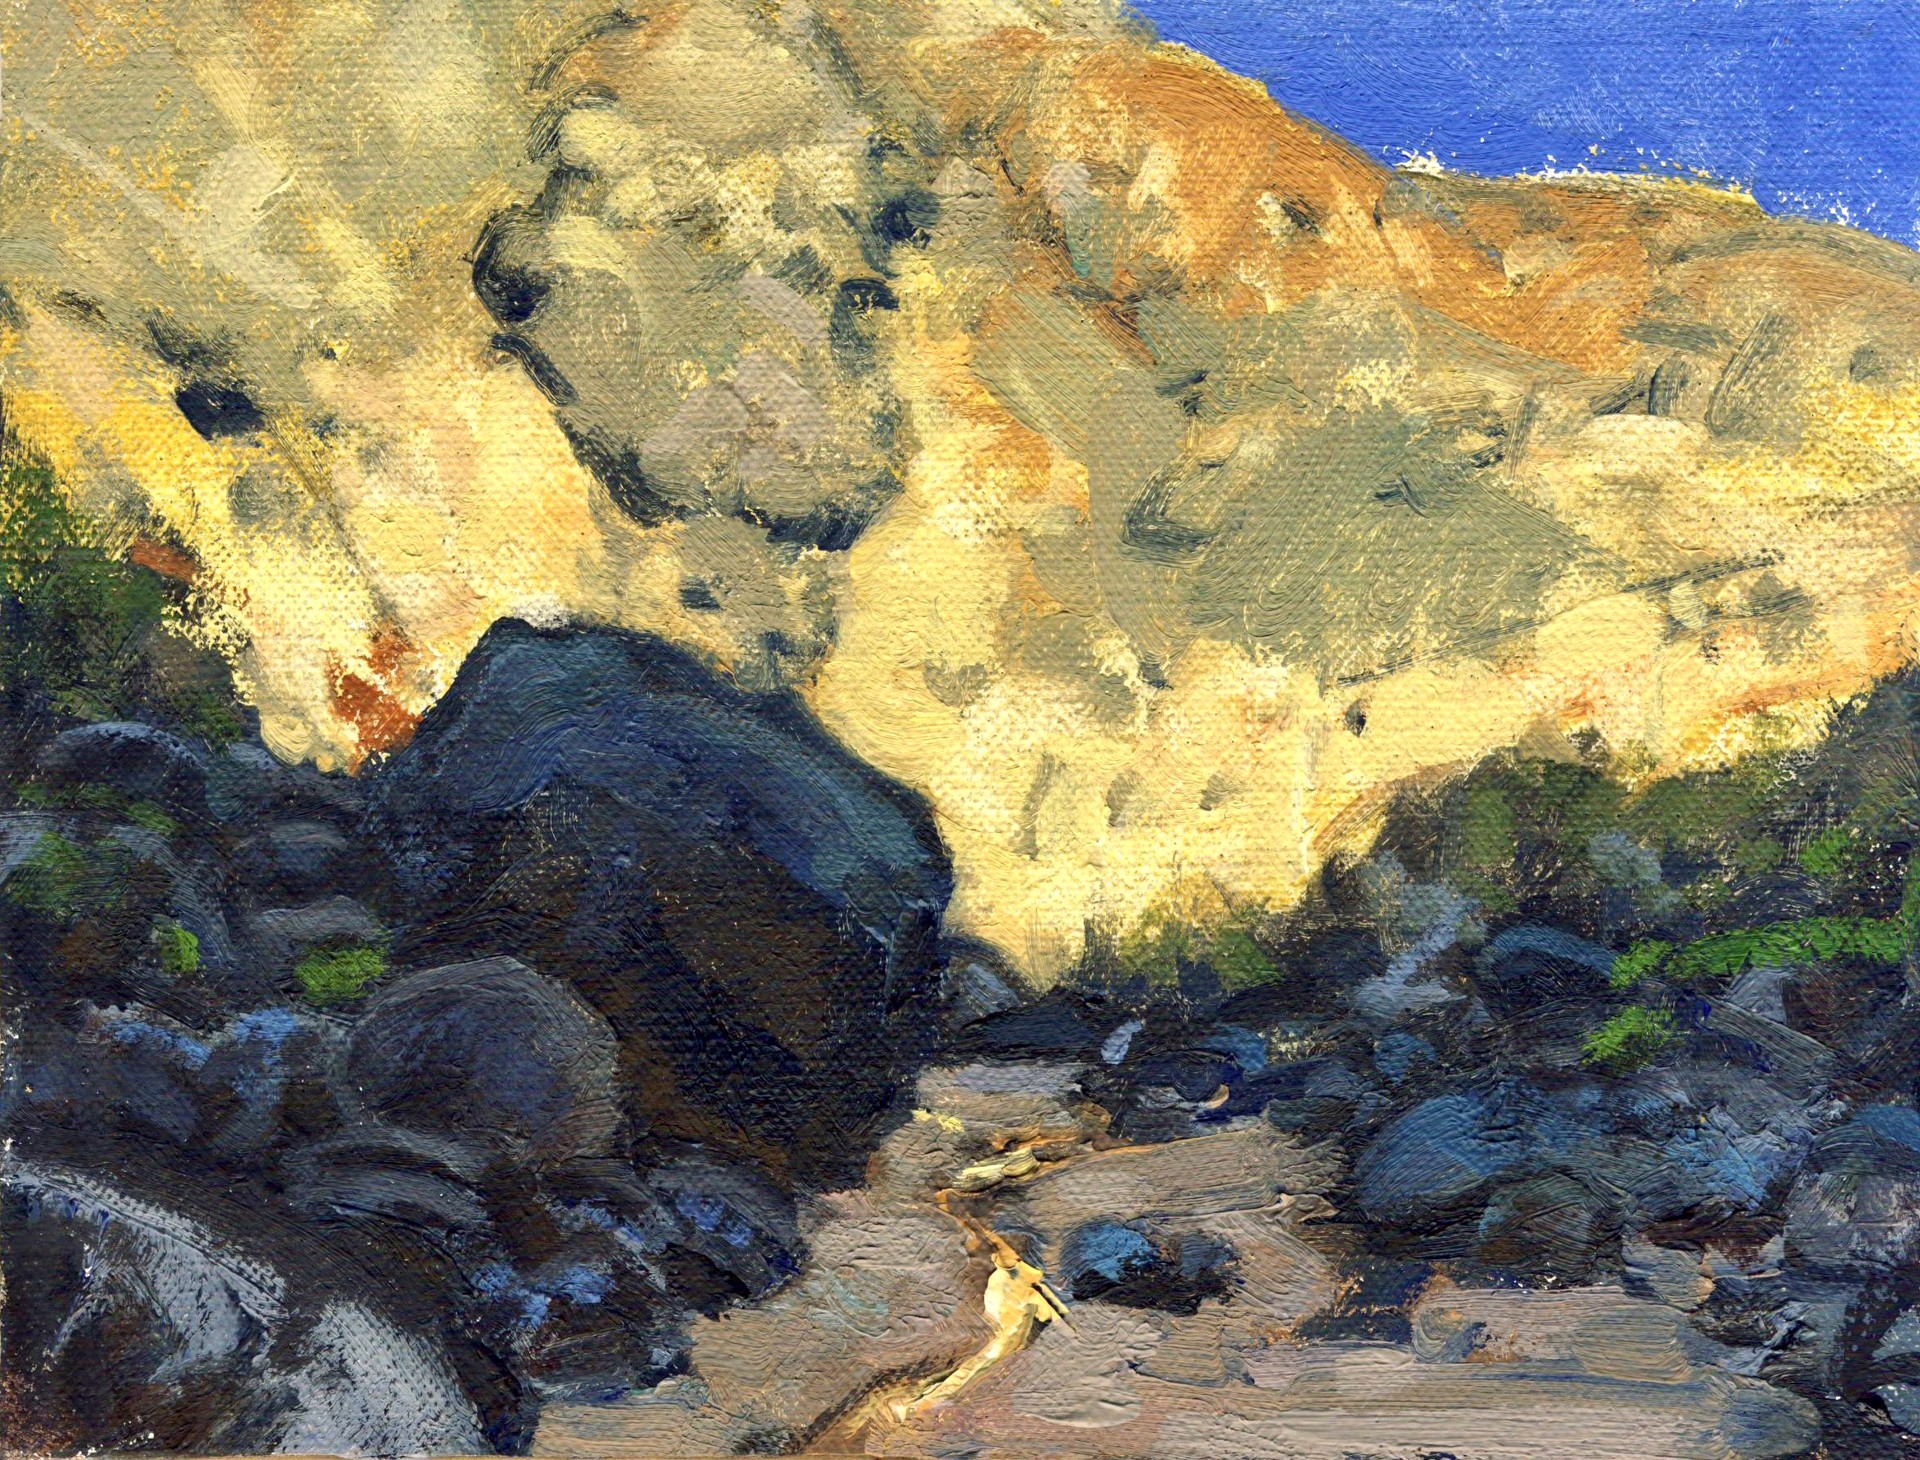 Desert Streamlet by Bill Gallen